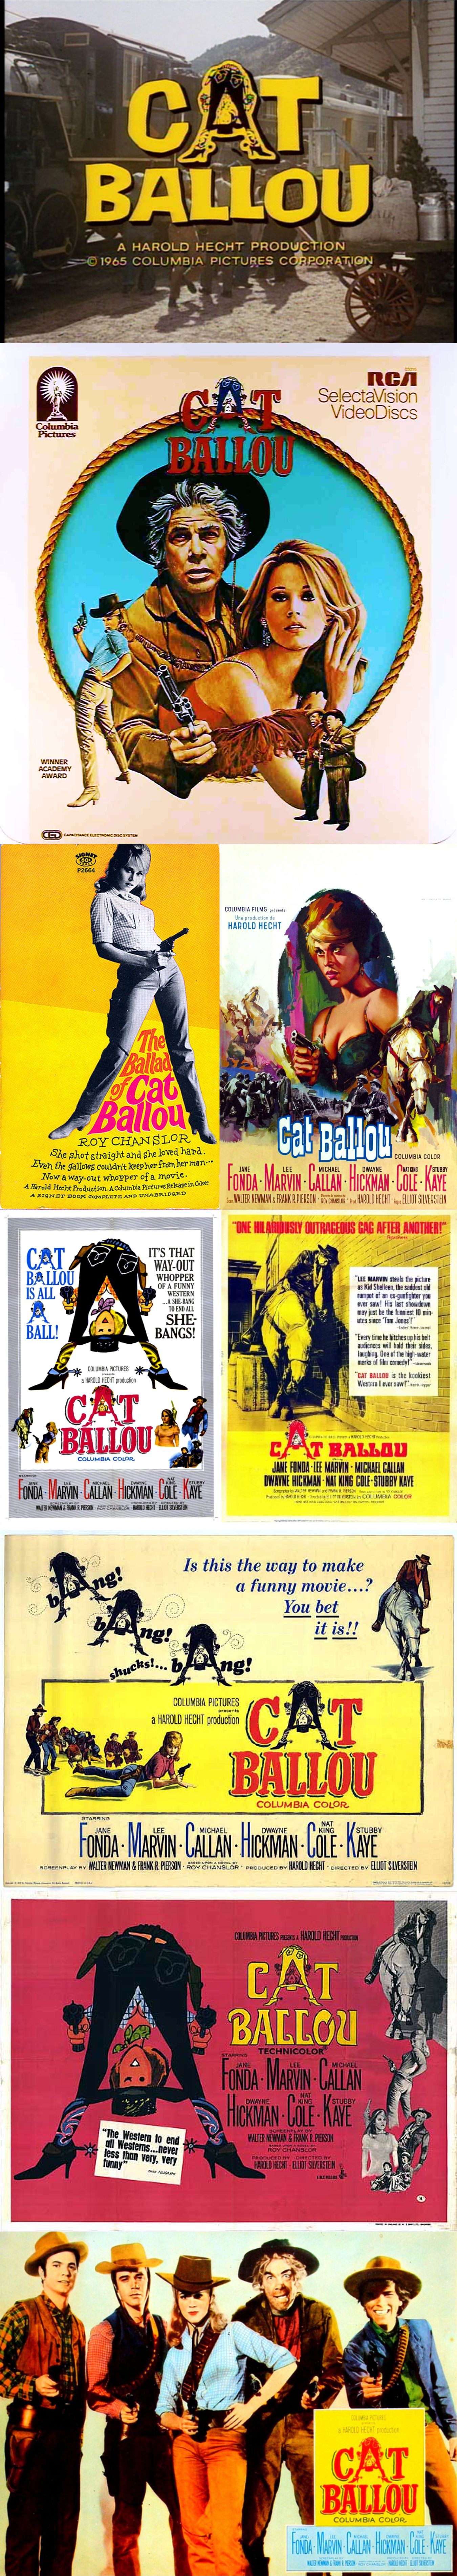 CAT BALLOU posters